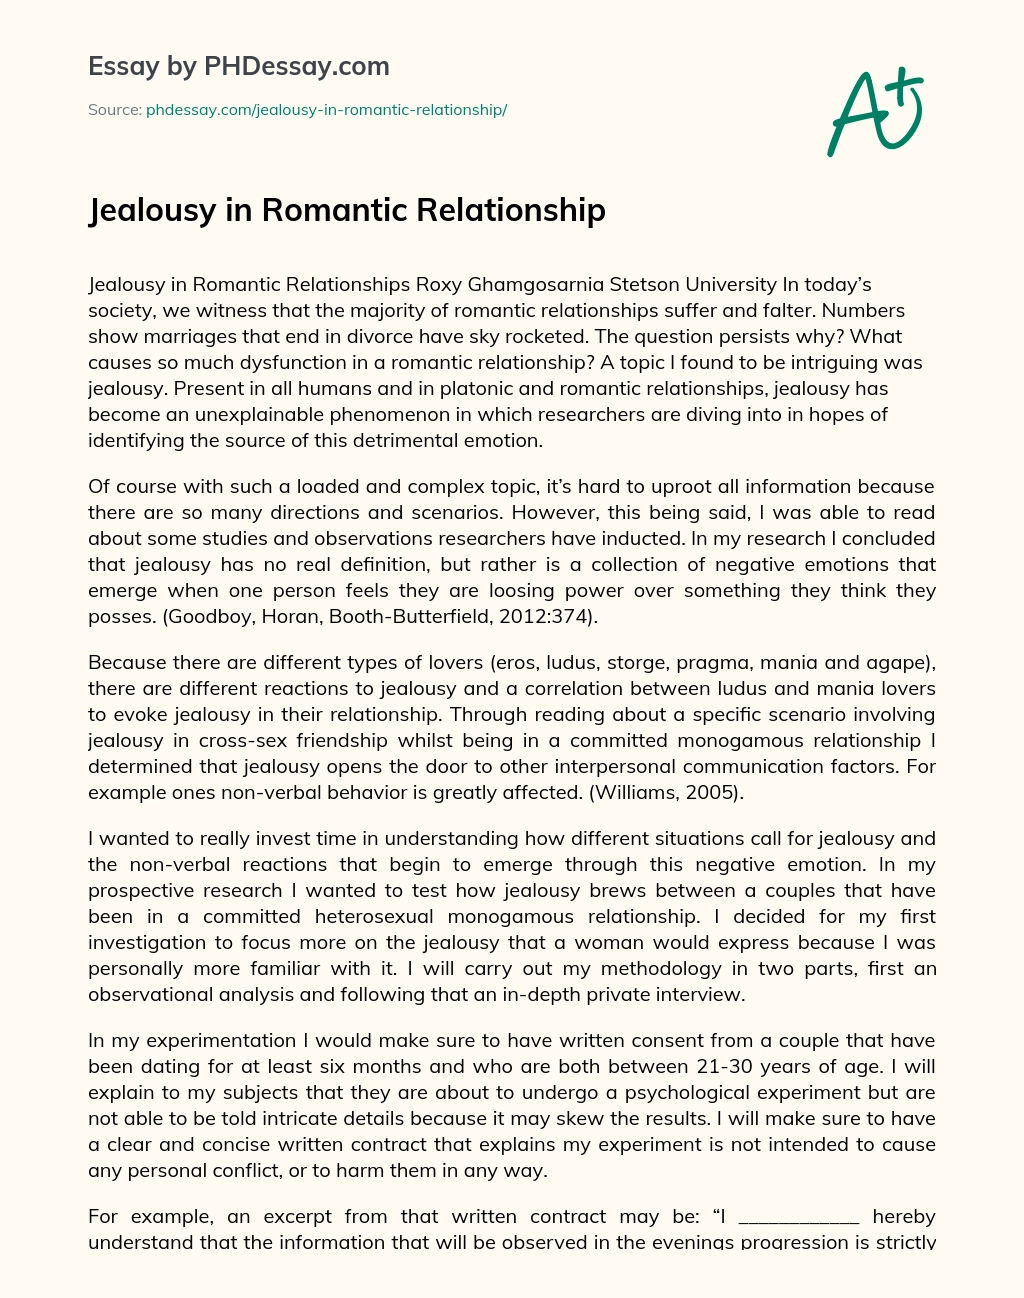 Jealousy in Romantic Relationship essay